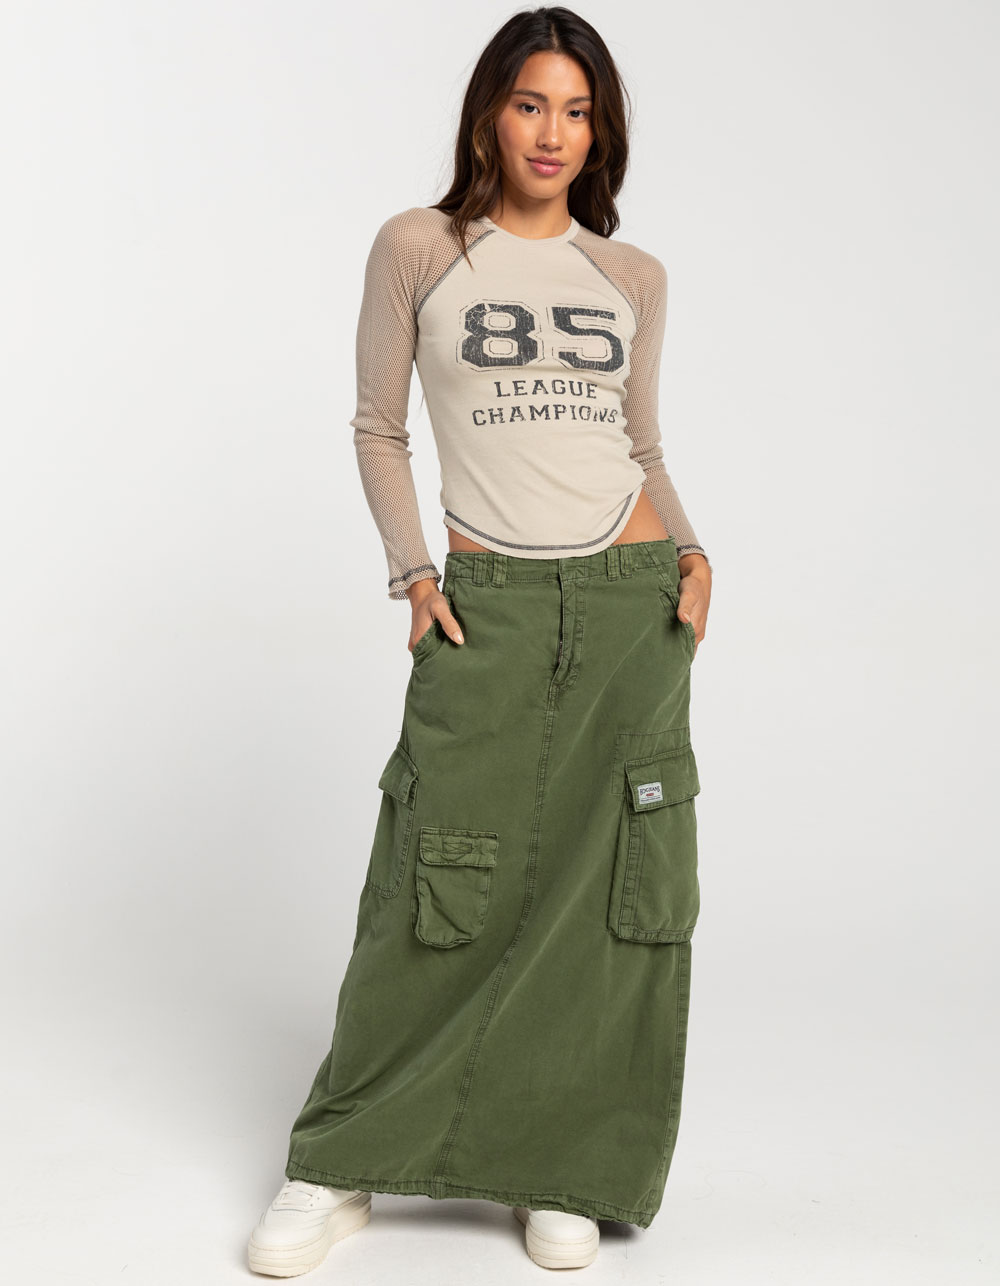 Long BDG 85 - Tillys Tee Urban | STONE Outfitters Sleeve Airtex Womens Raglan